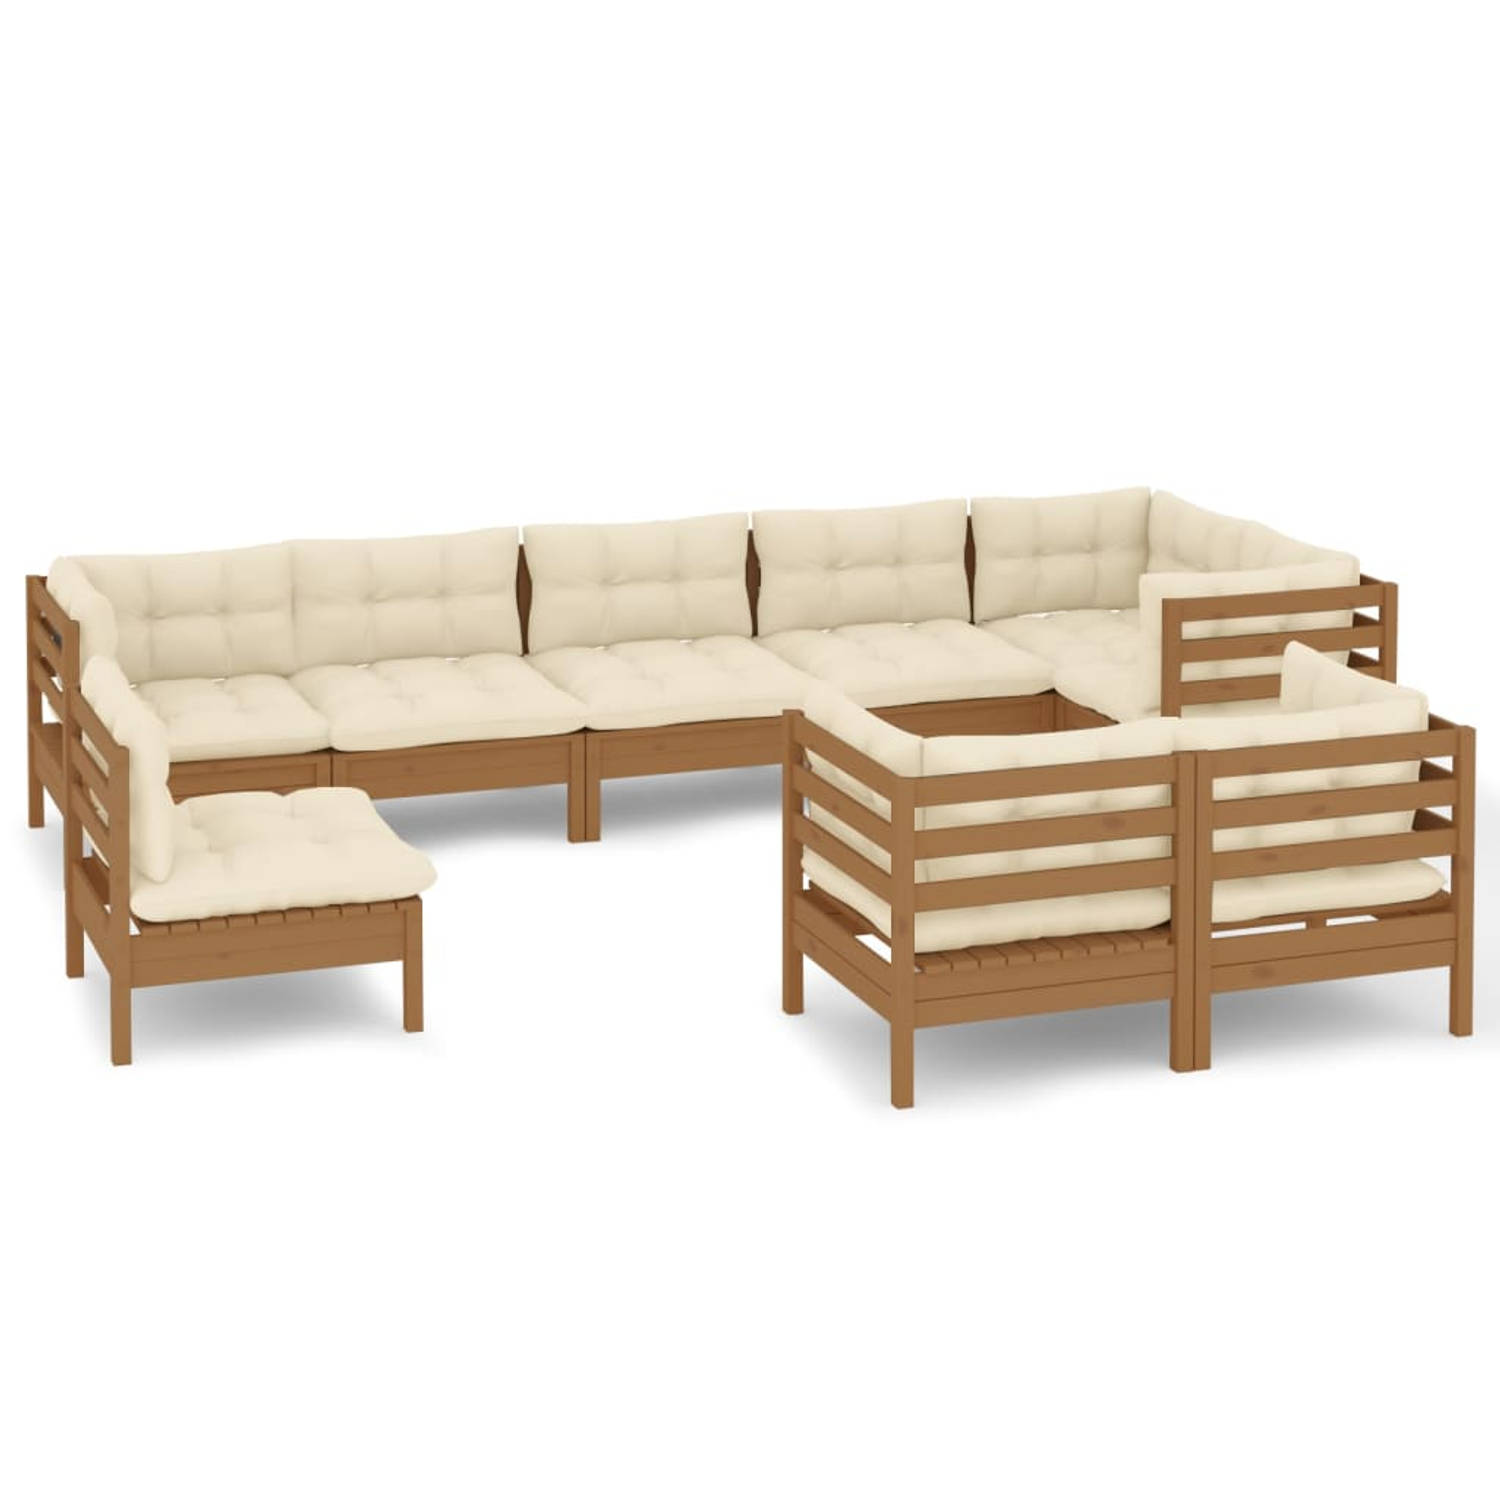 The Living Store Loungeset Honey Brown - Pine Wood - Modular - 5x Corner Sofa 4x Middle Sofa 9x Seat Cushion 14x Back Cushion